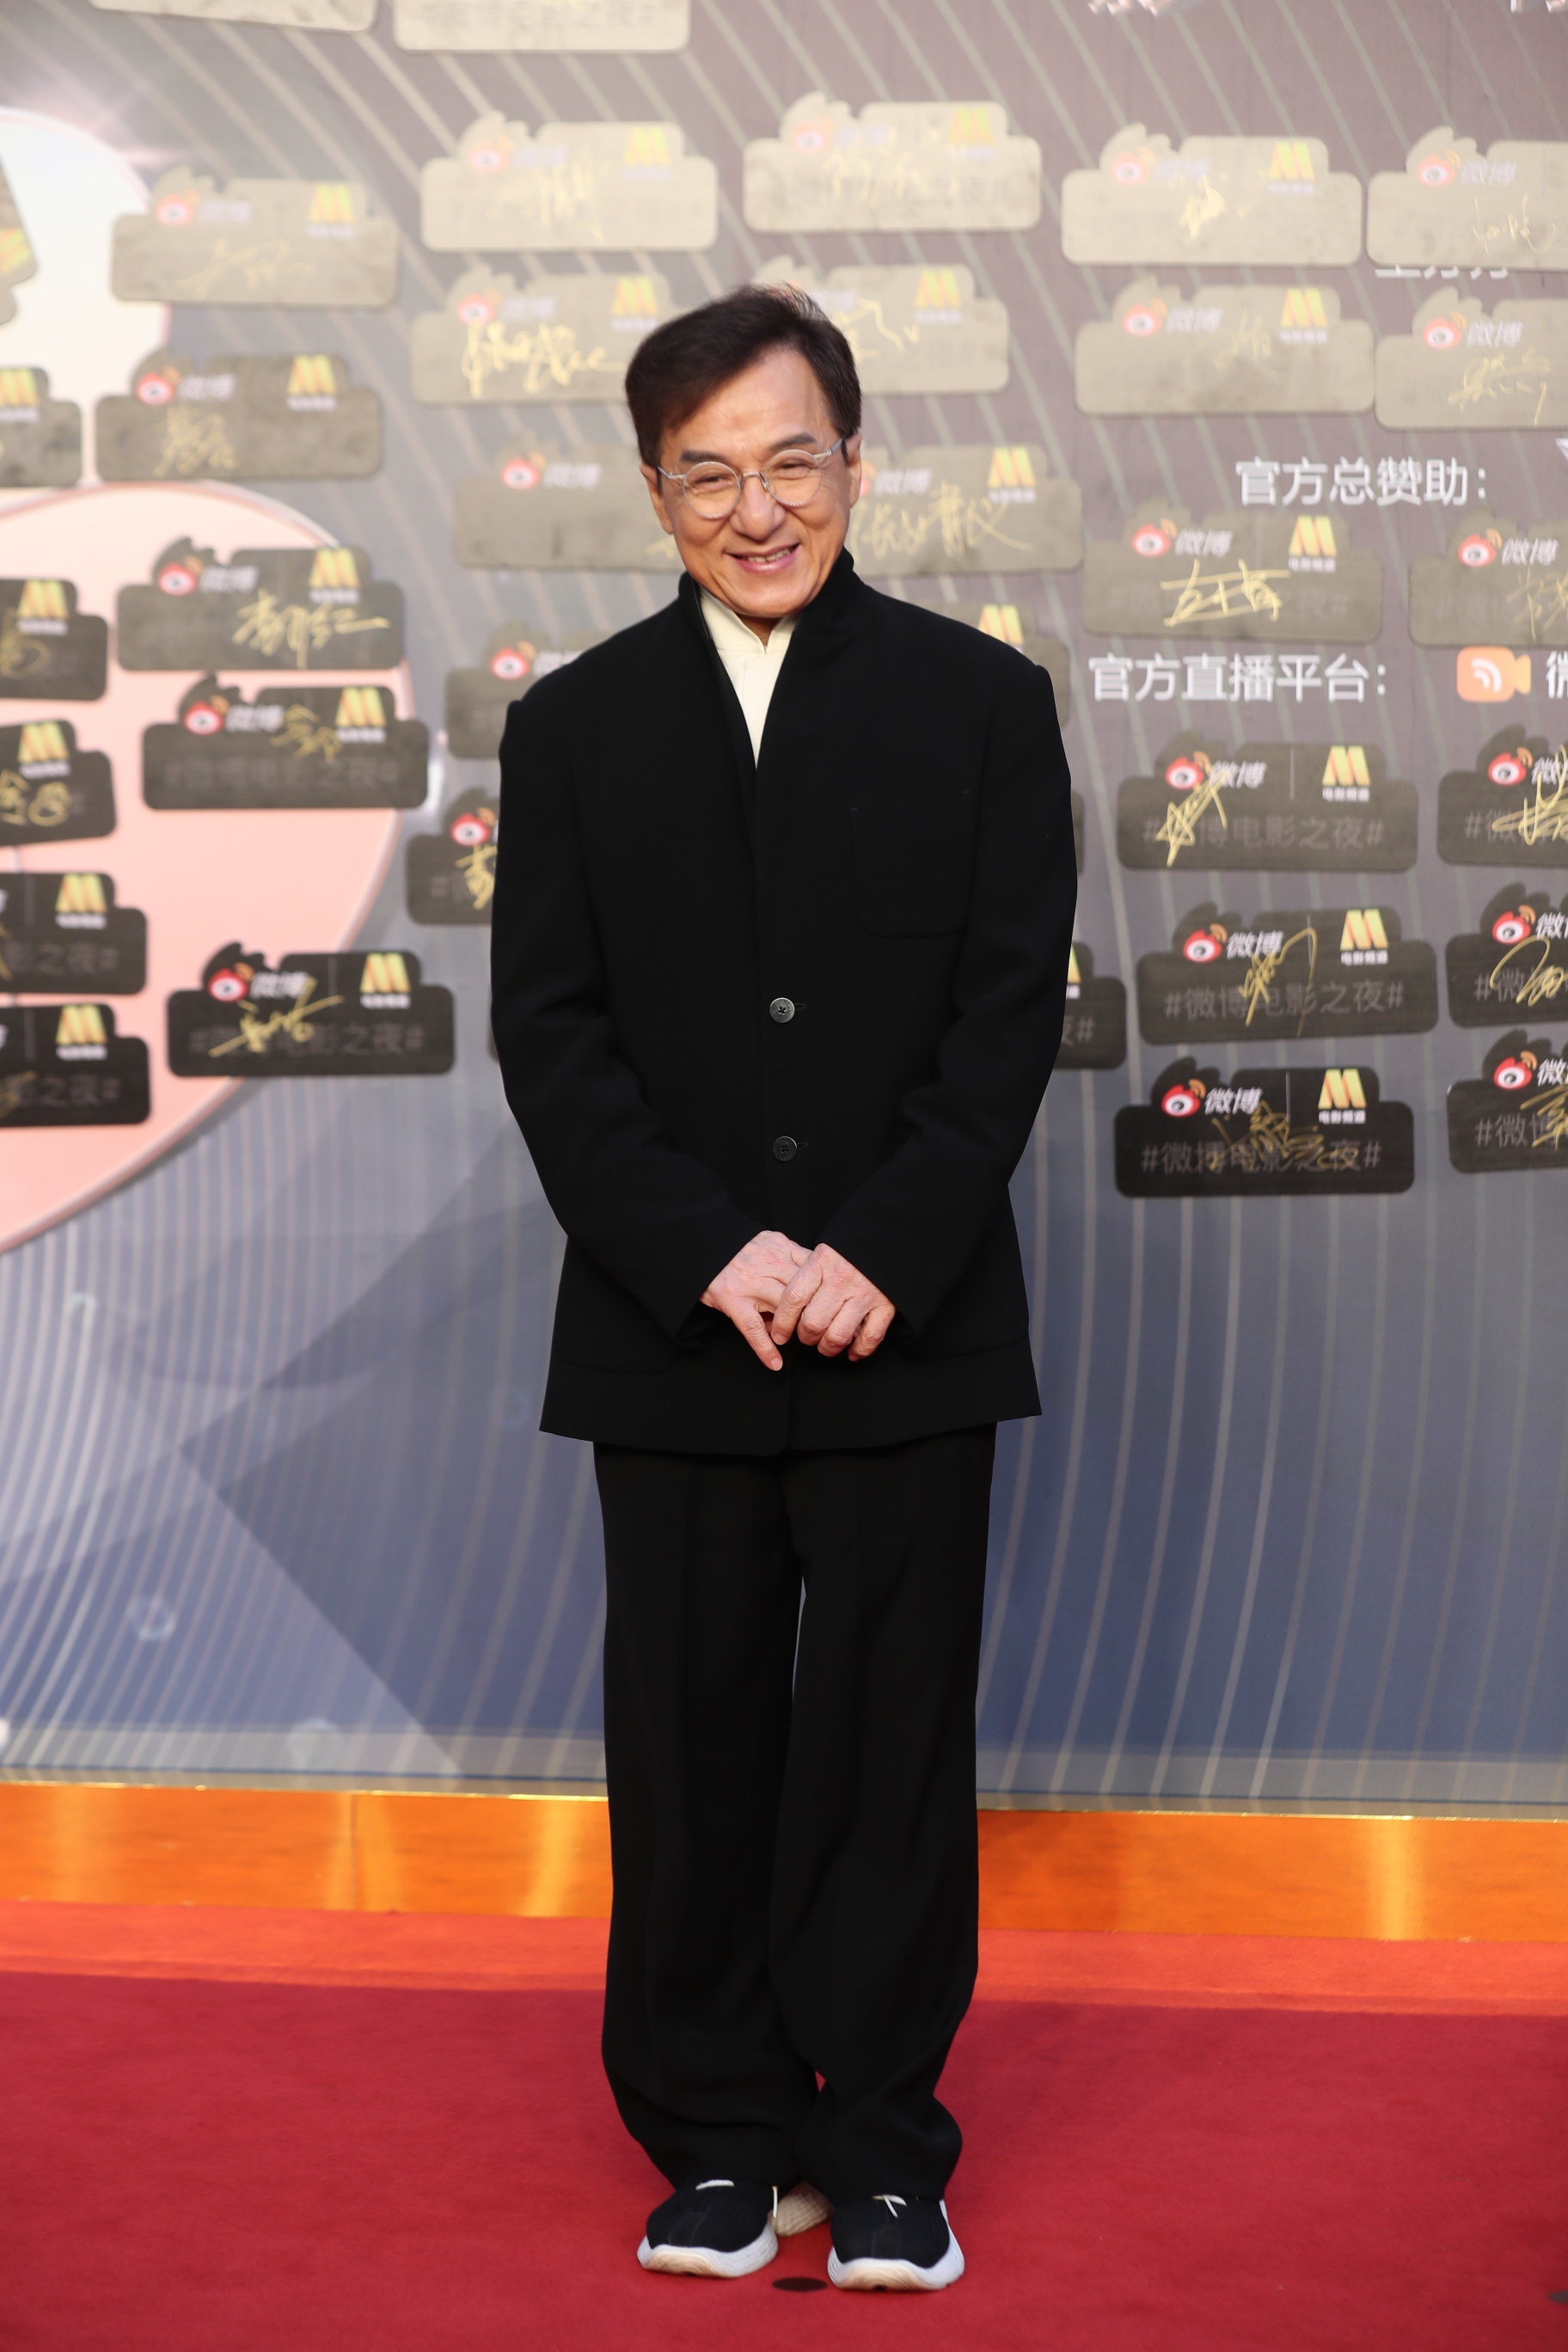 At the Weibo Movie Awards